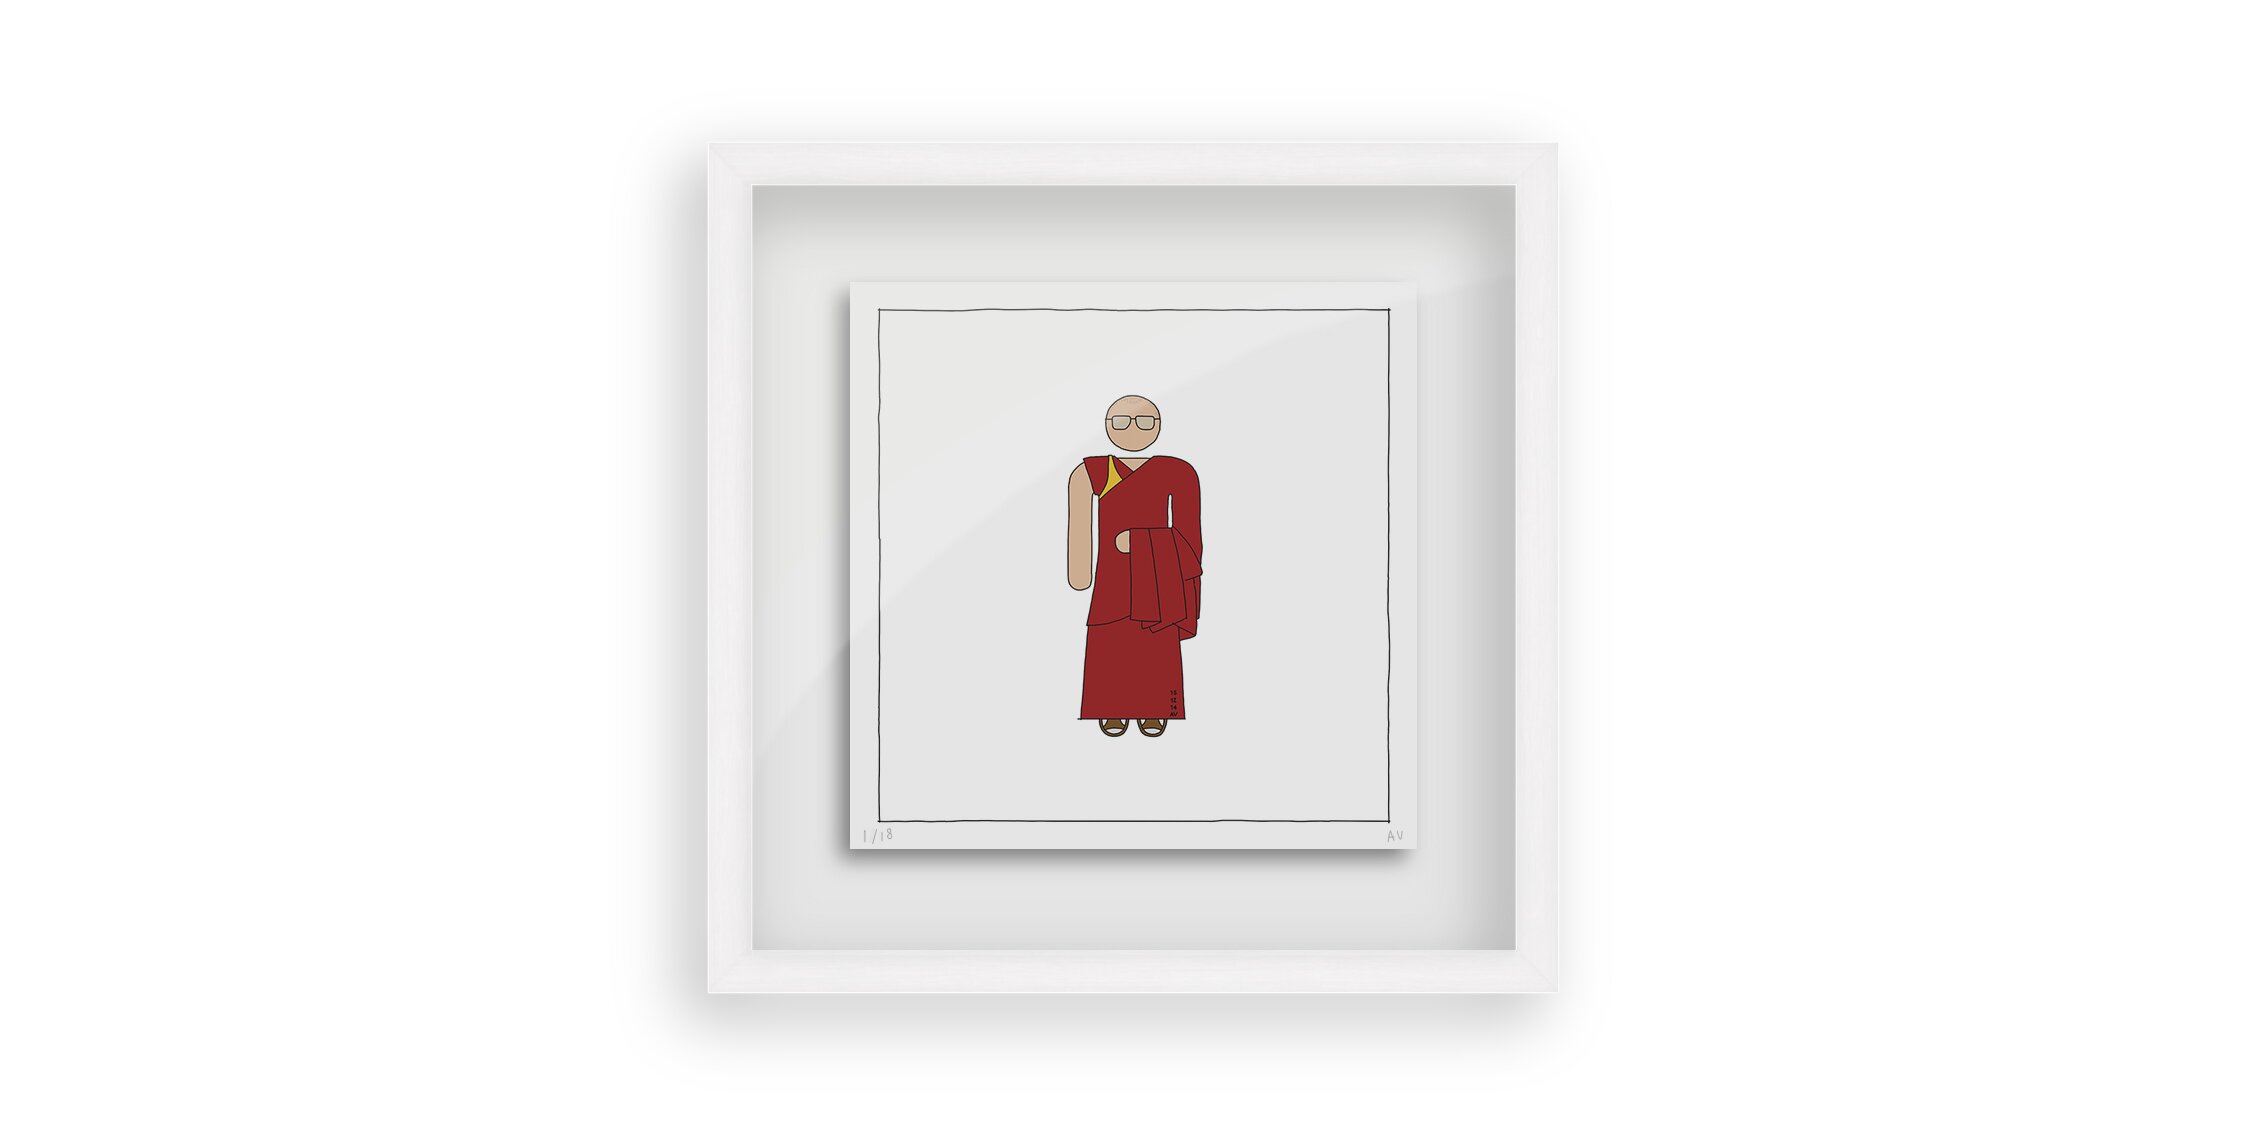 Dalai Lama - Persona Art Project (Ant Vervoort Hand Drawing)